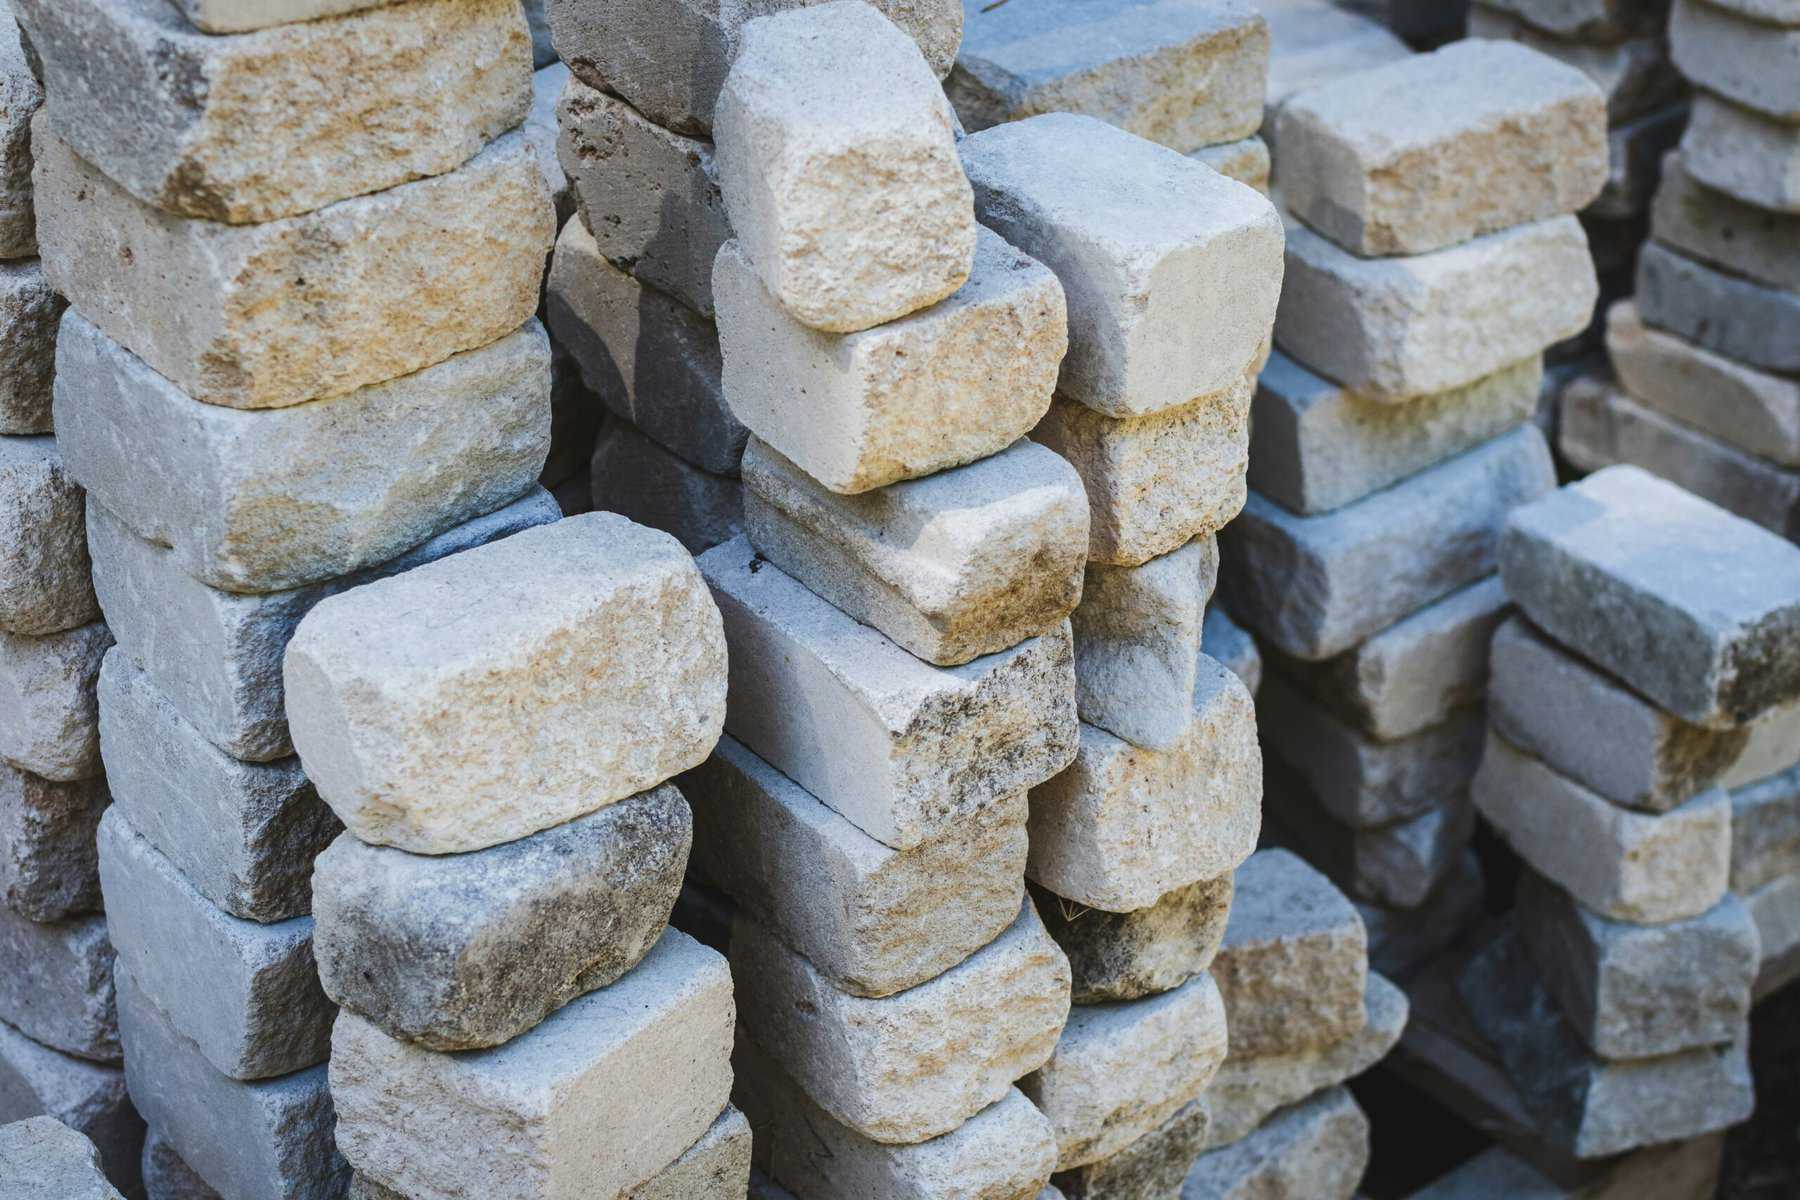 Stacks of grey stone blocks.